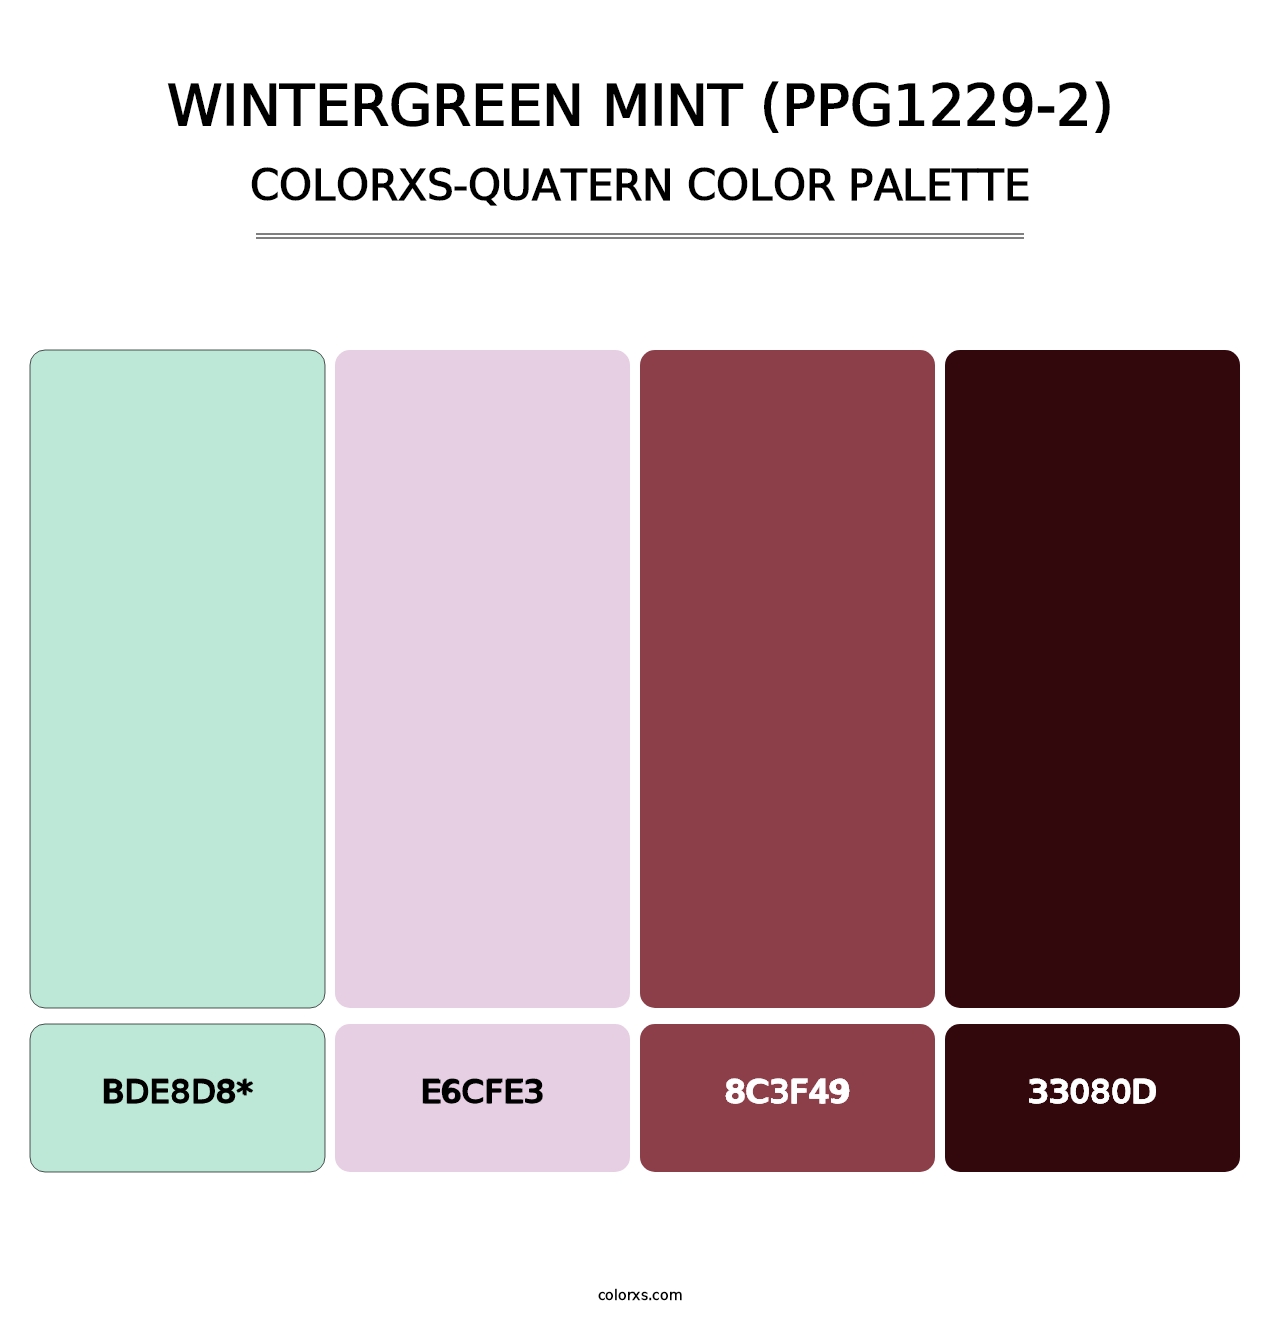 Wintergreen Mint (PPG1229-2) - Colorxs Quatern Palette